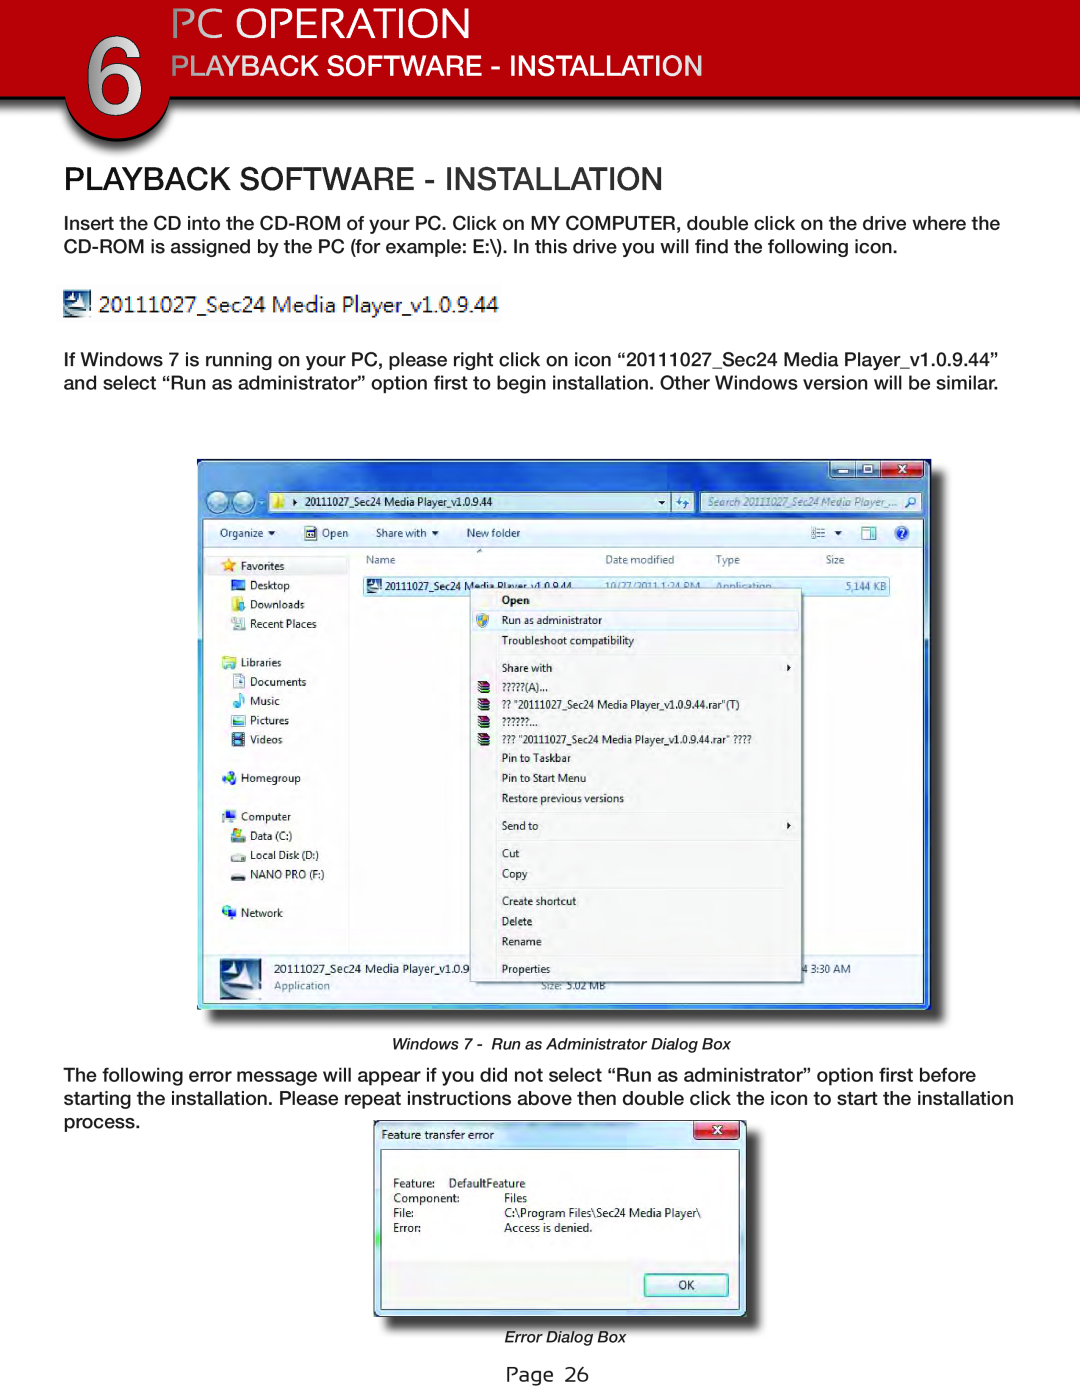 First Alert DWS-472, DWS-471 user manual Playback Software - Installation, Pc Operation 